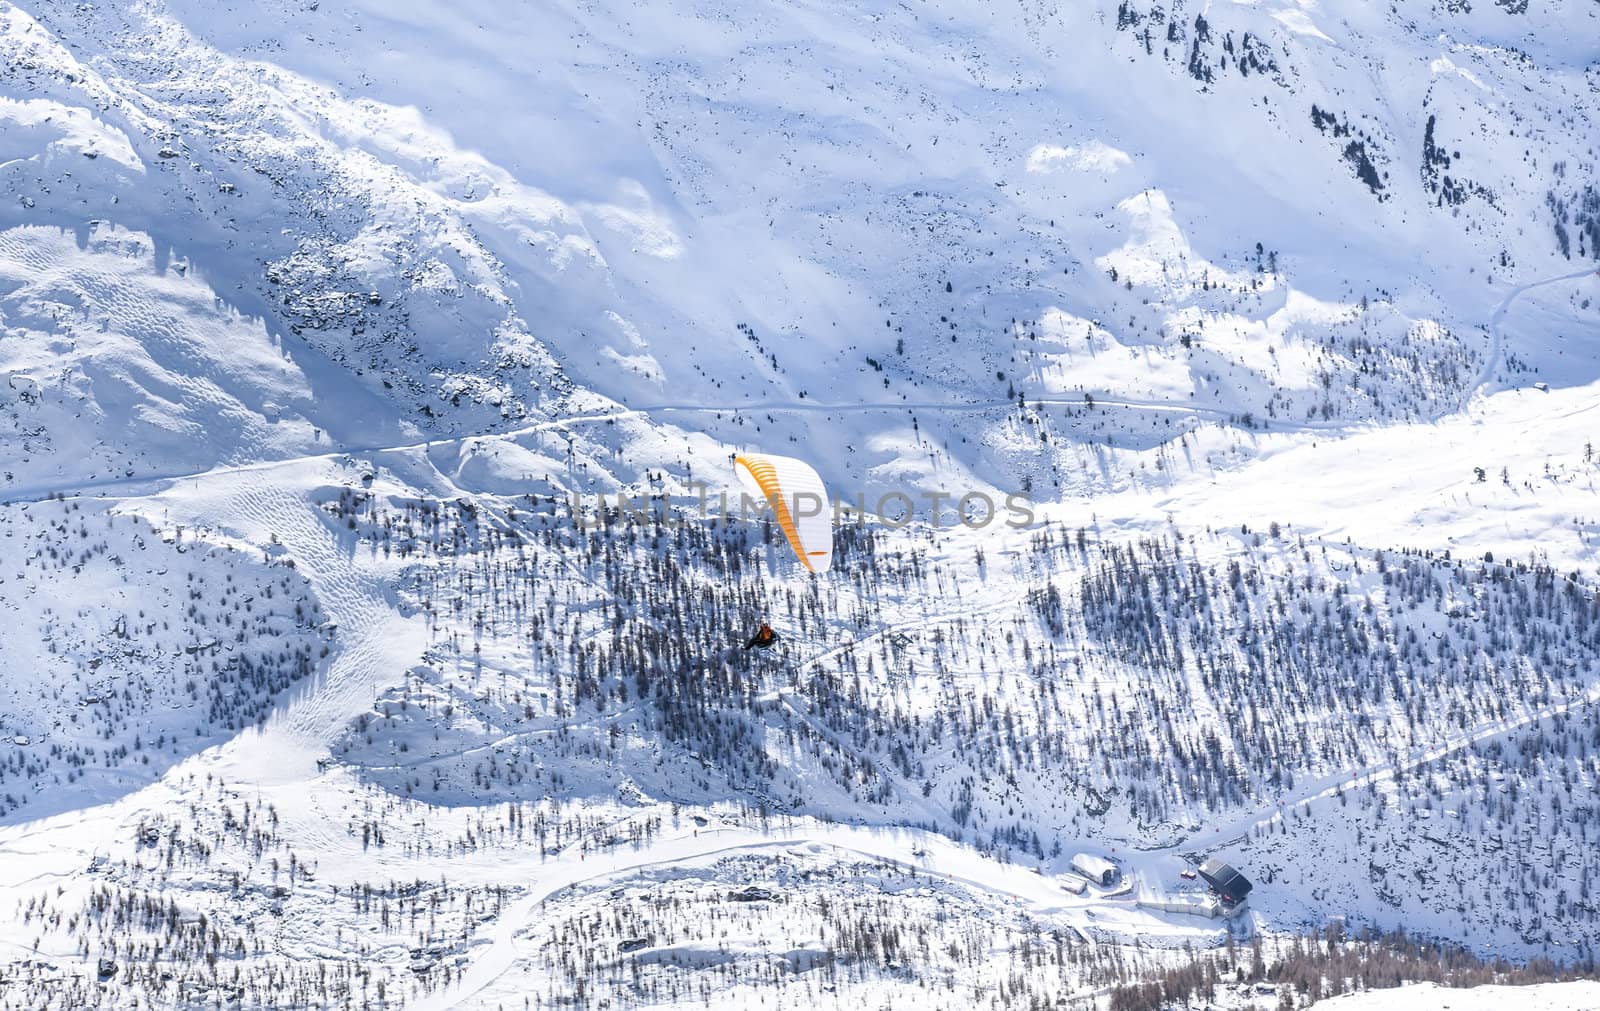 Alps snow hills with orange parachute